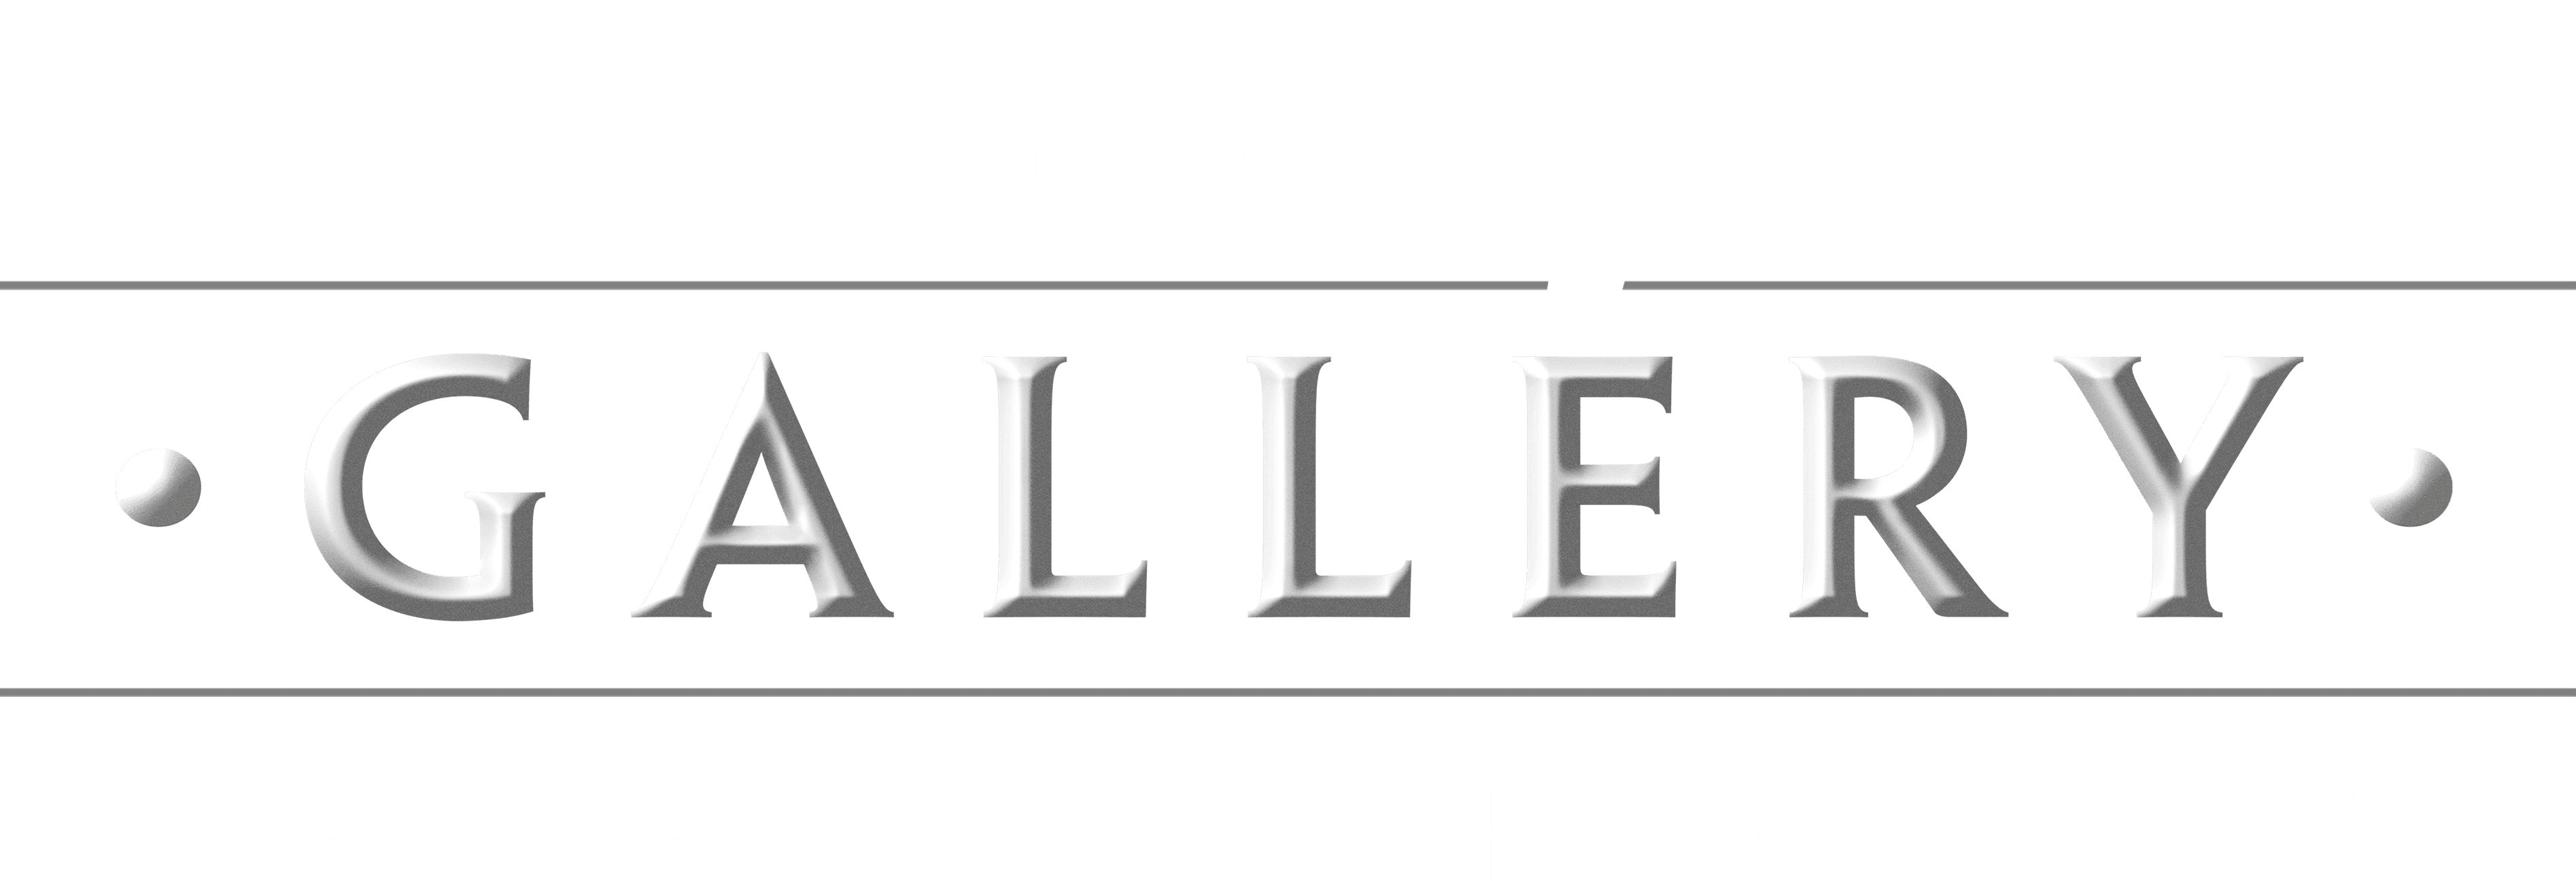 Disney Gallery / Star Wars: The Book of Boba Fett logo